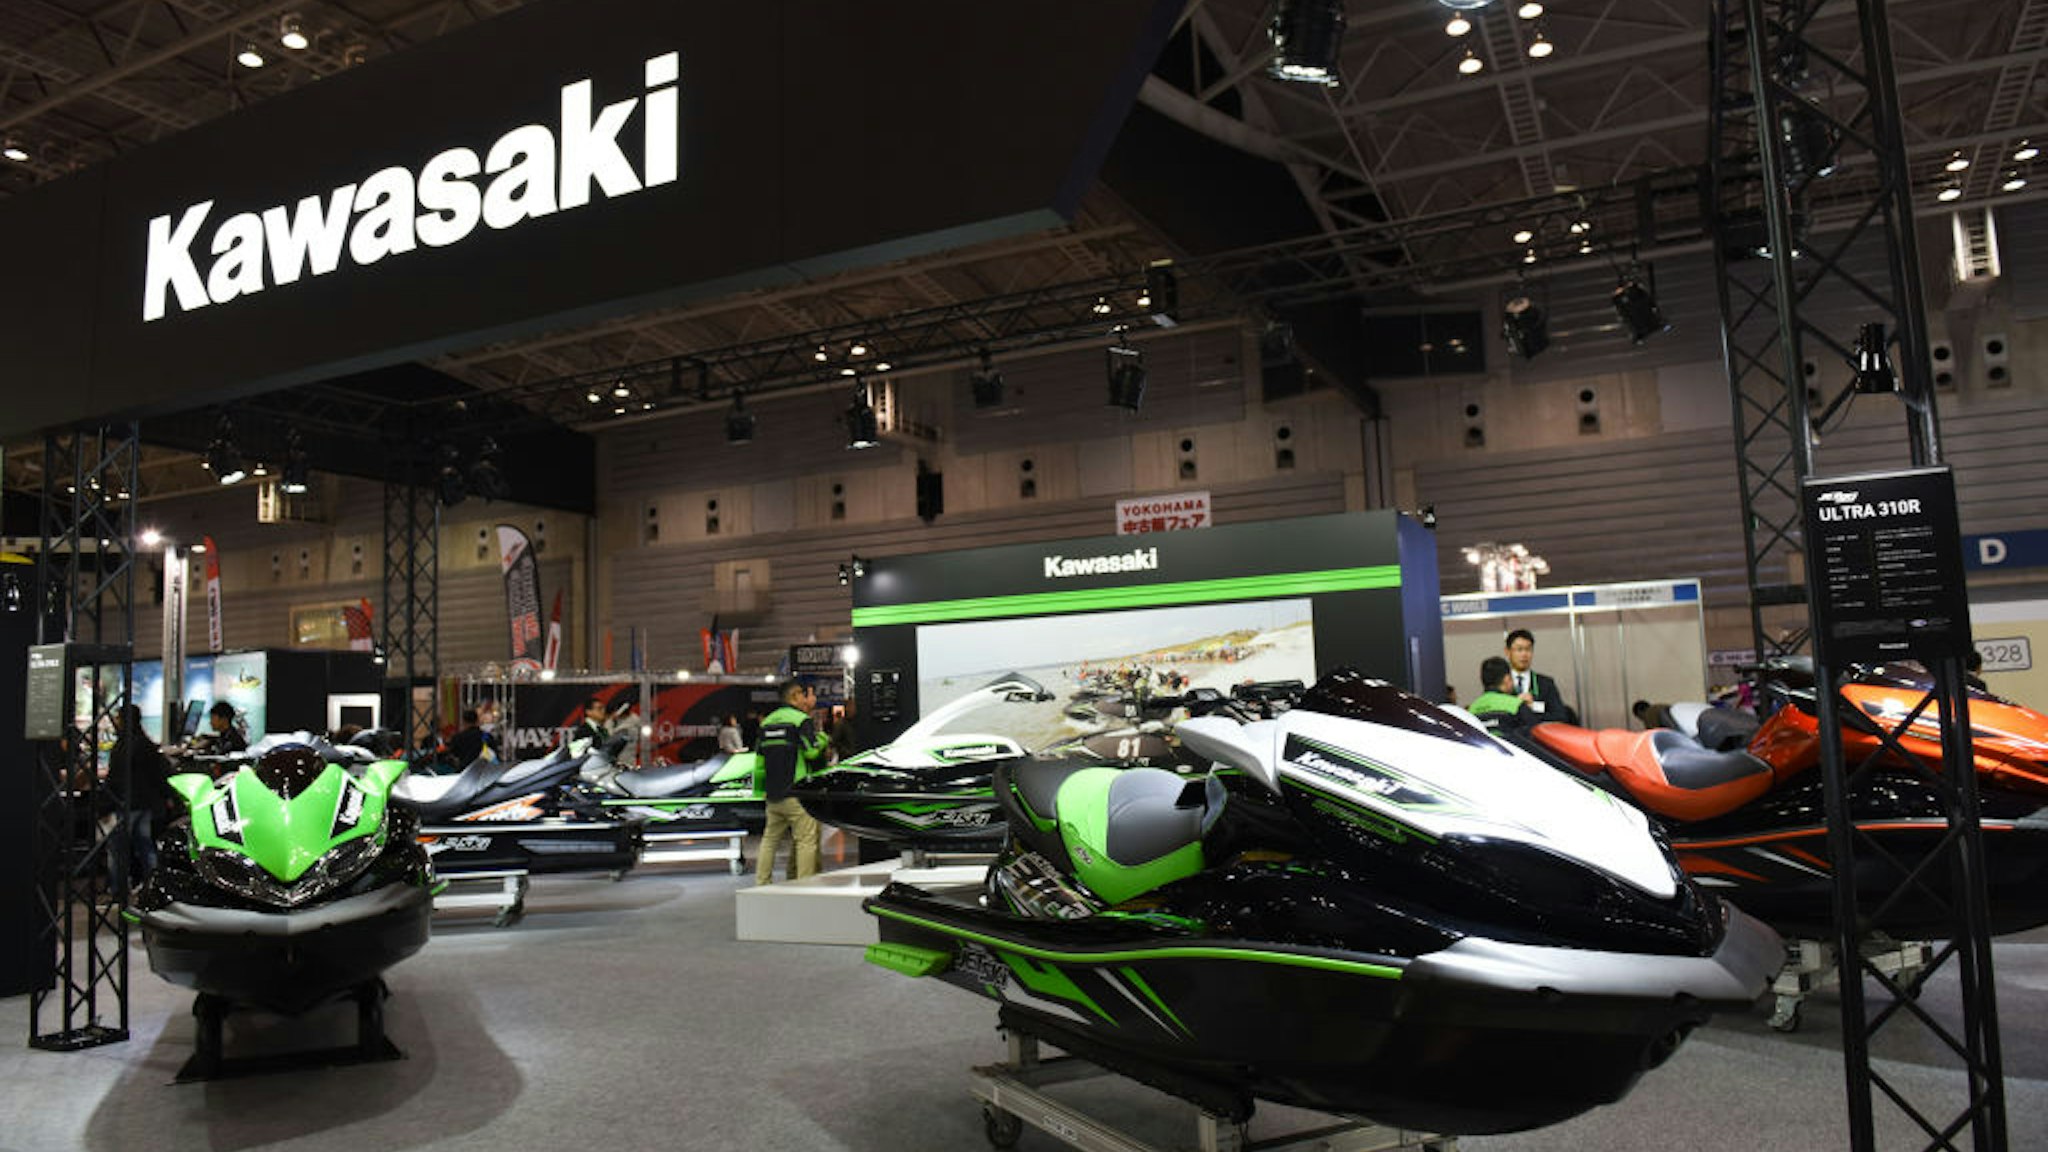 Kawasaki Jet ski